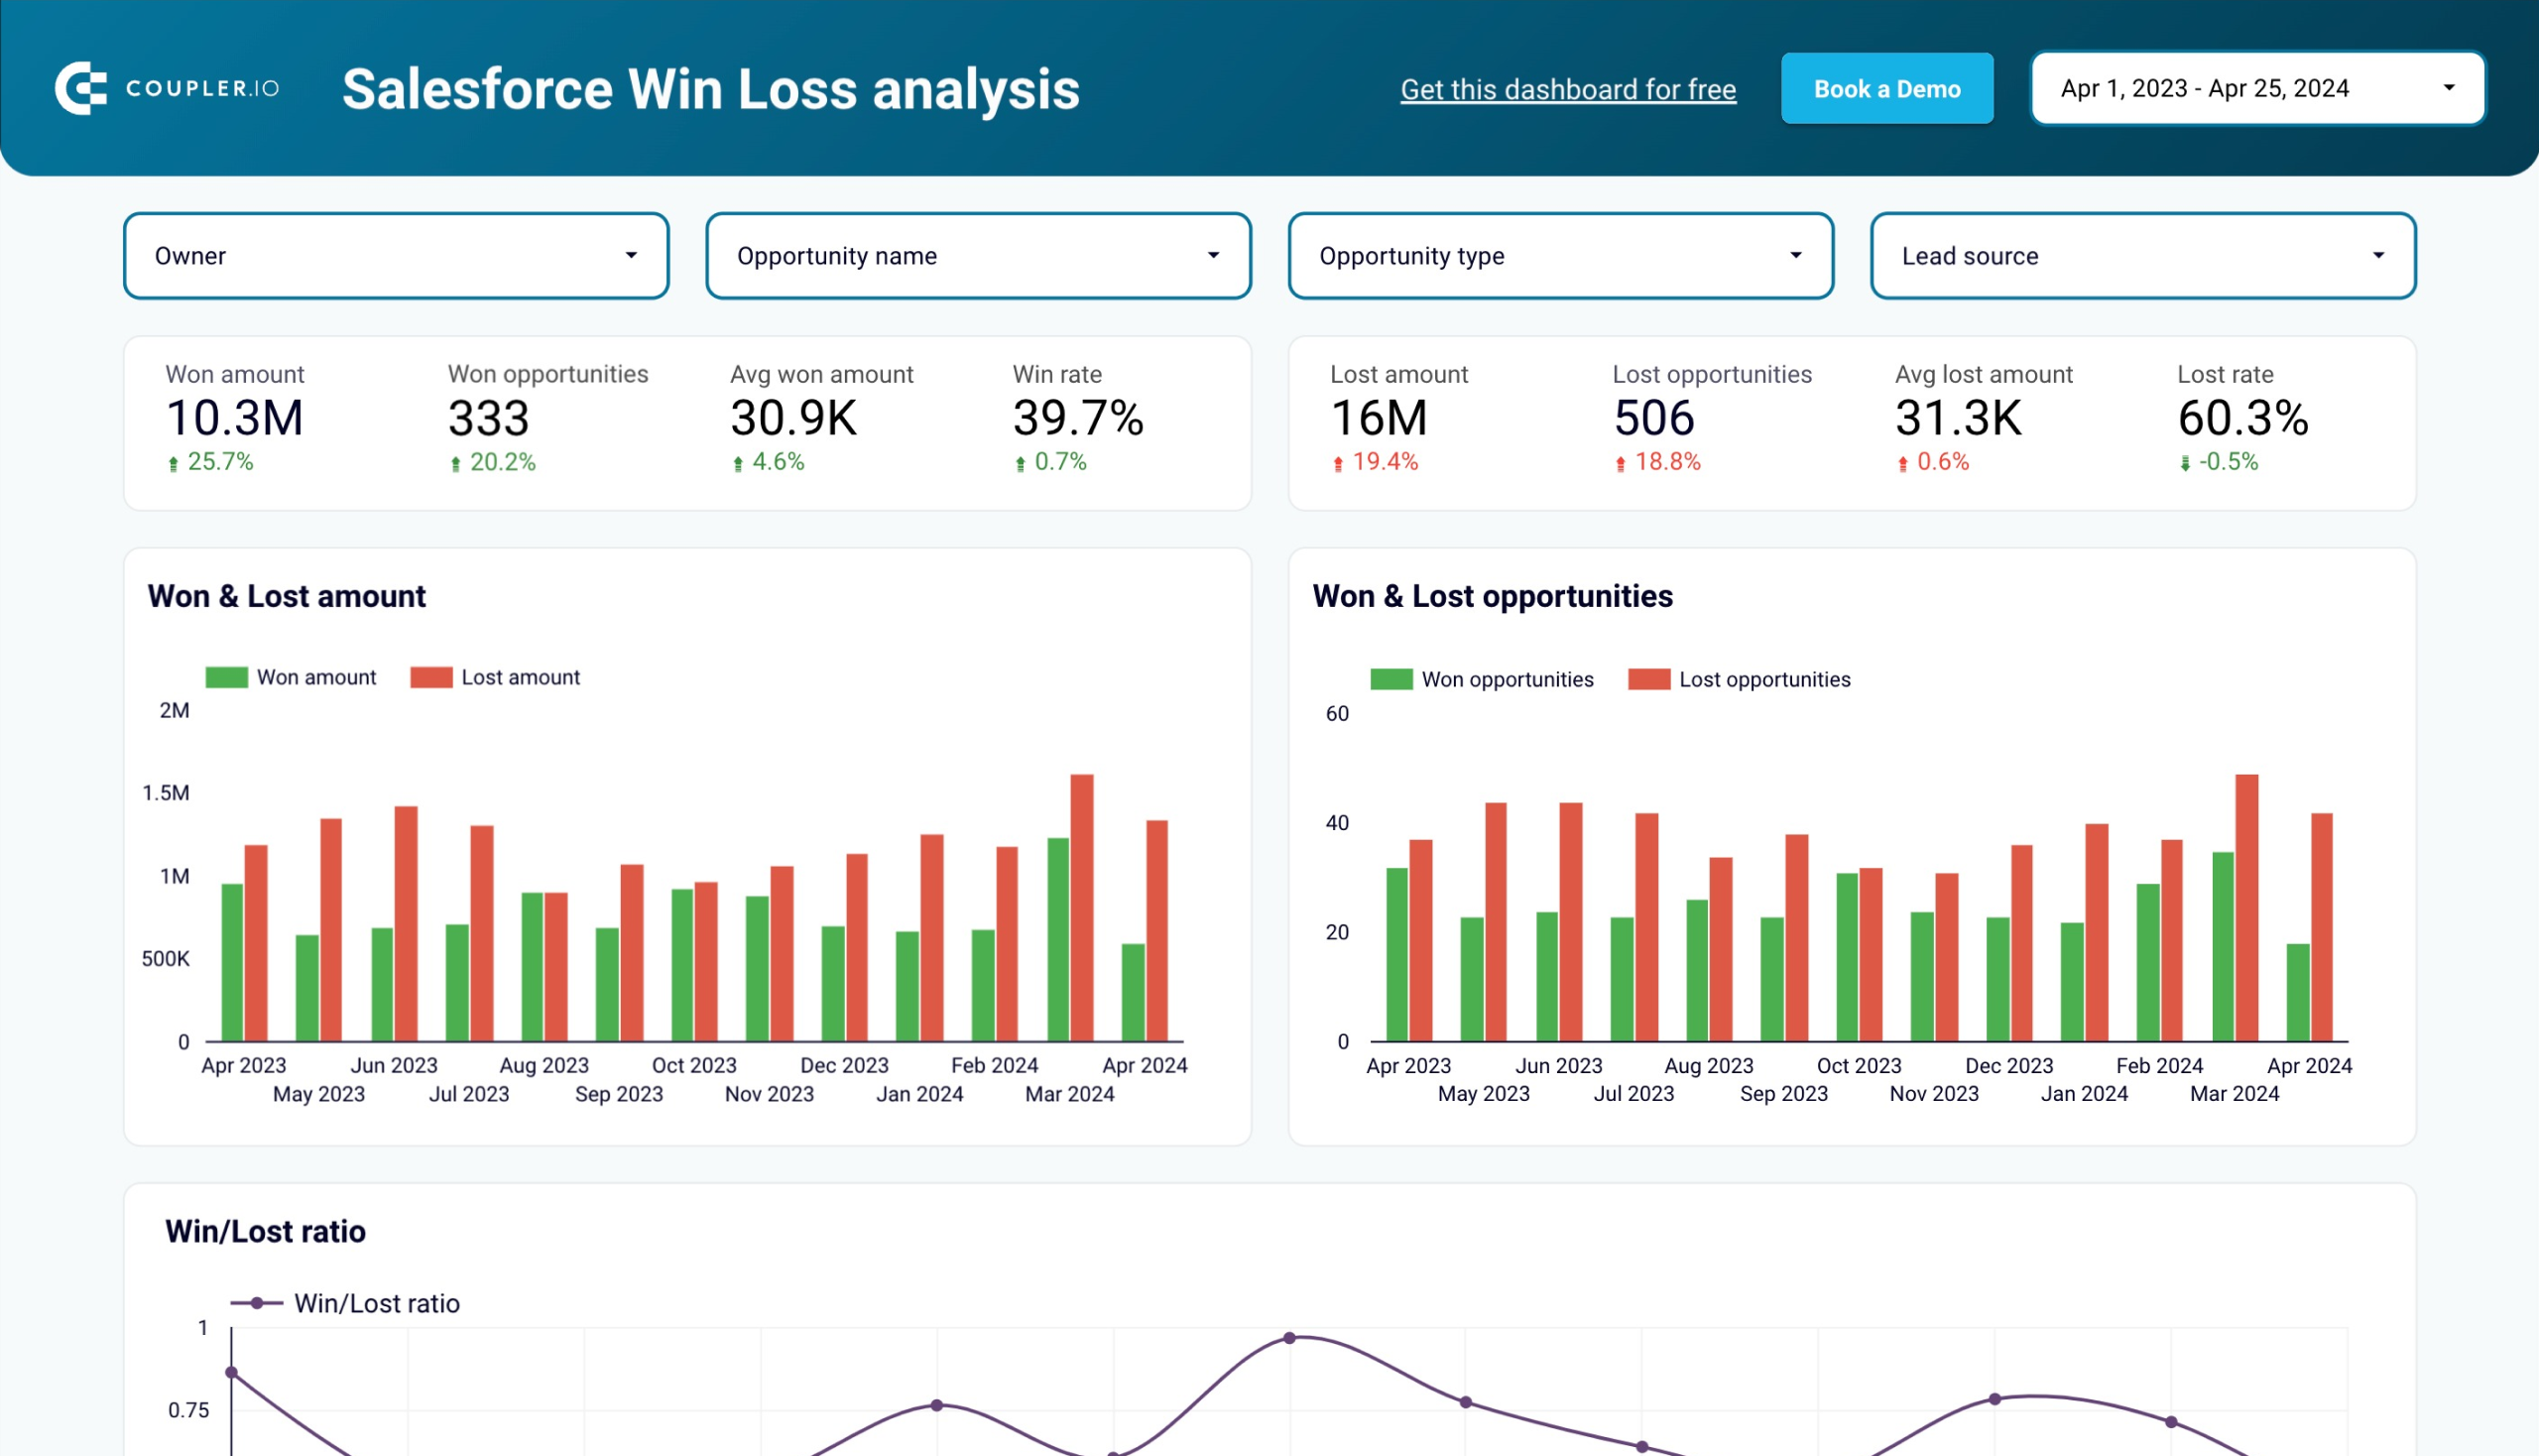 Salesforce Win Loss analysis dashboard image